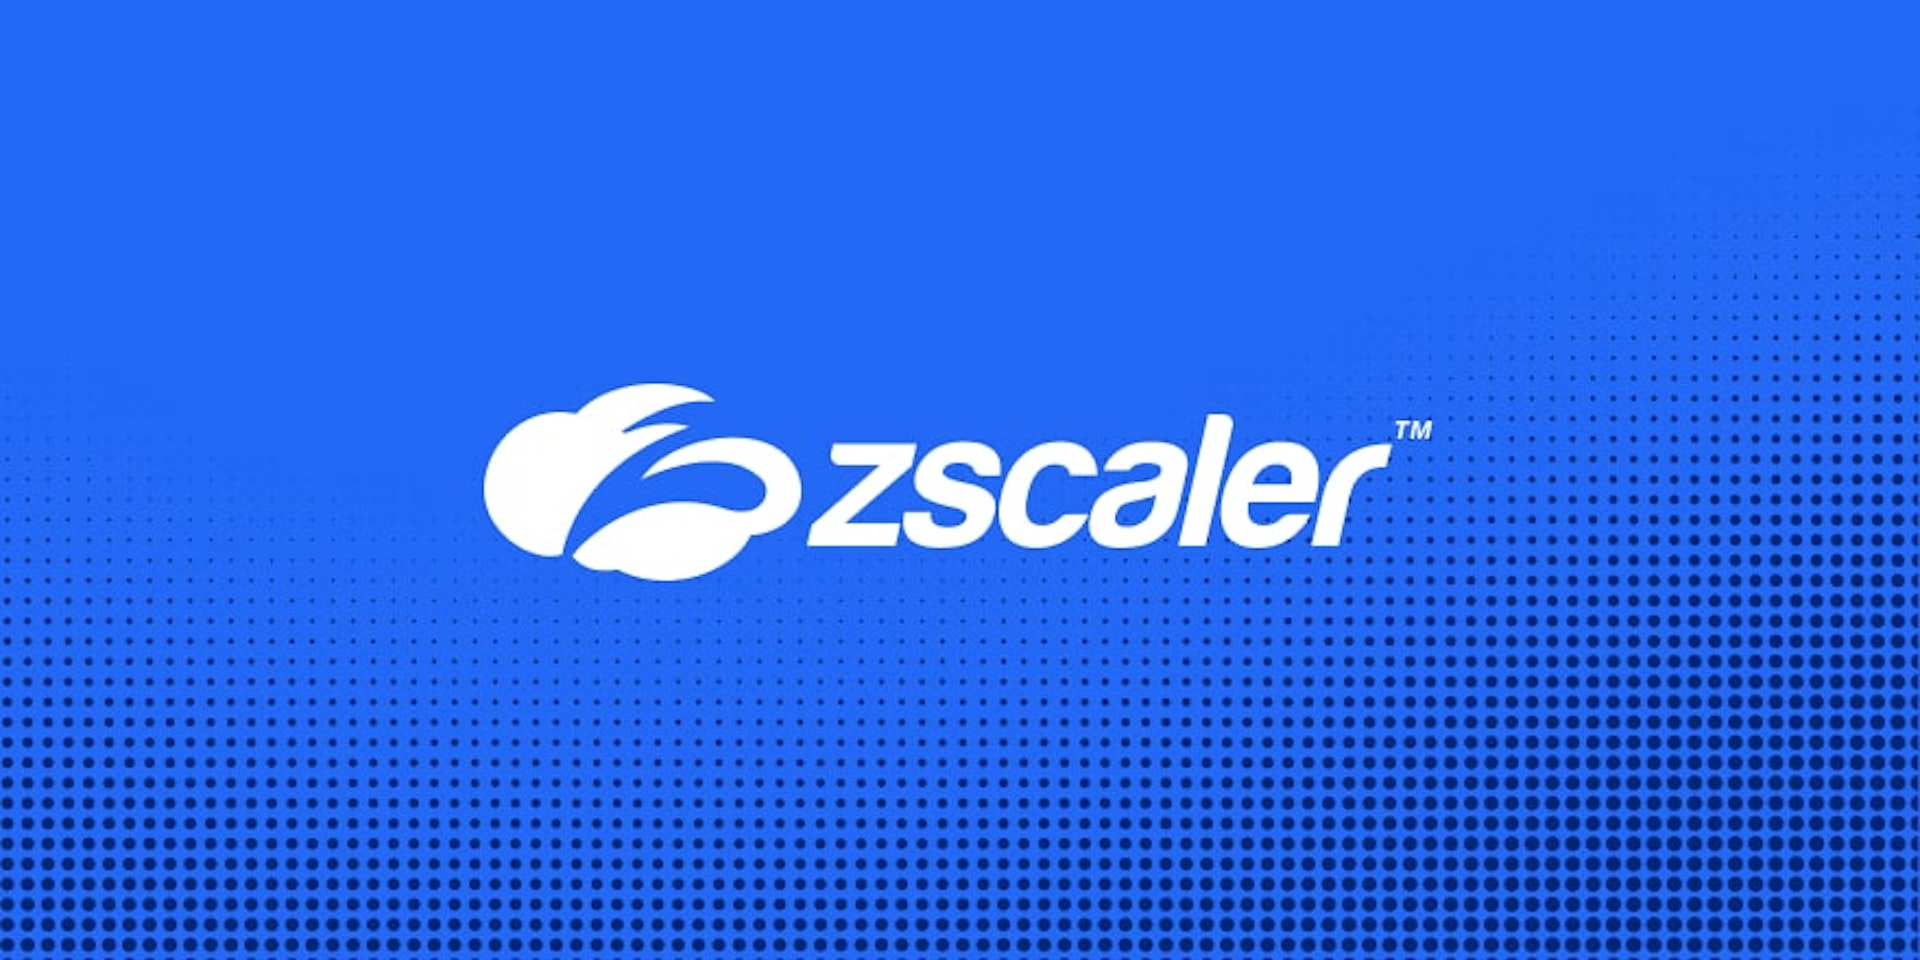 Logotipo da Zscaler